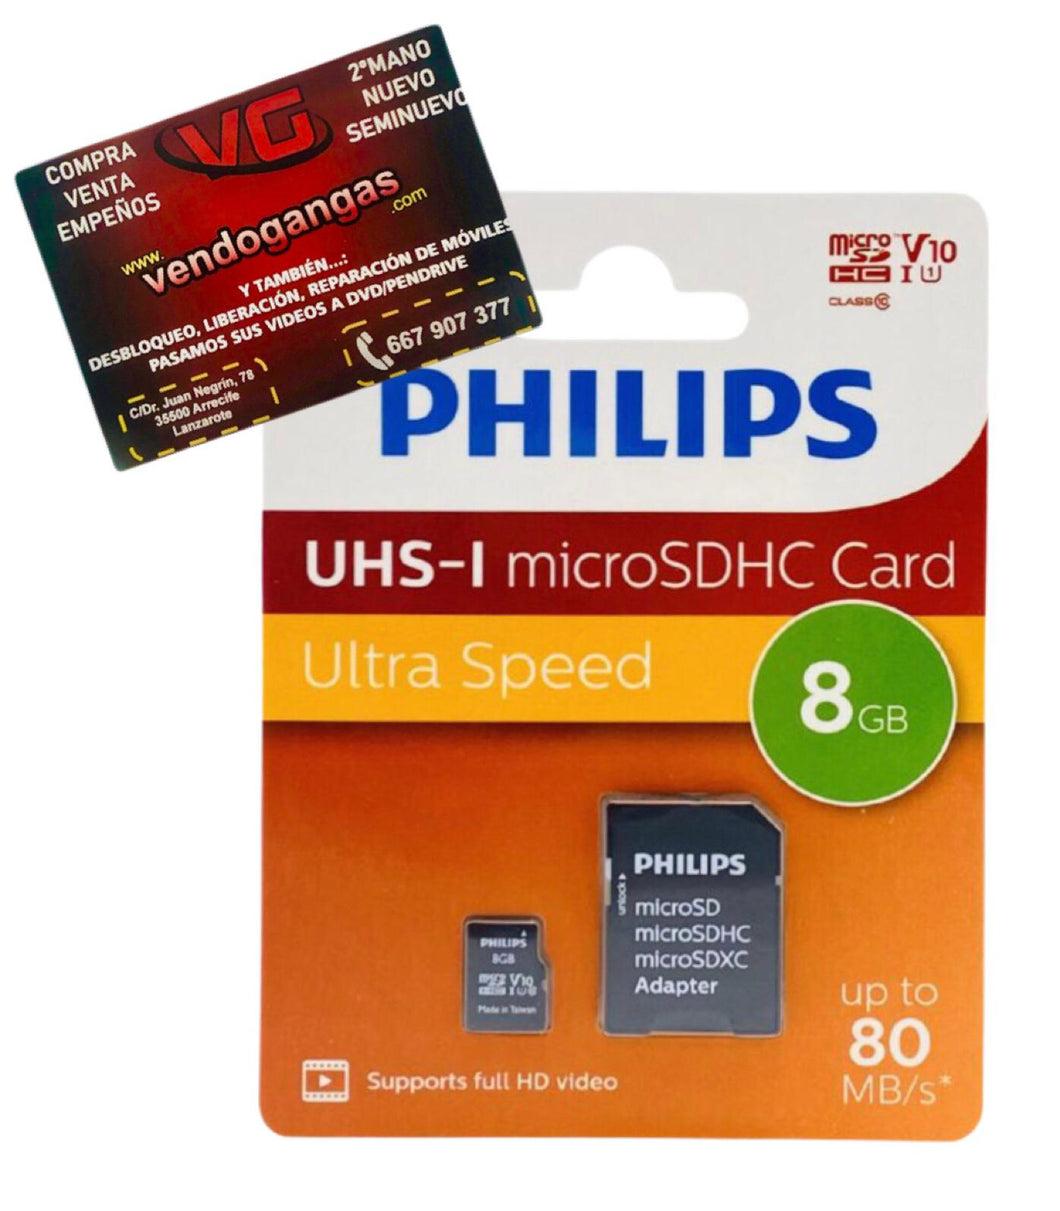 MICRO SD 8GB PHILIPS A ESTRENAR